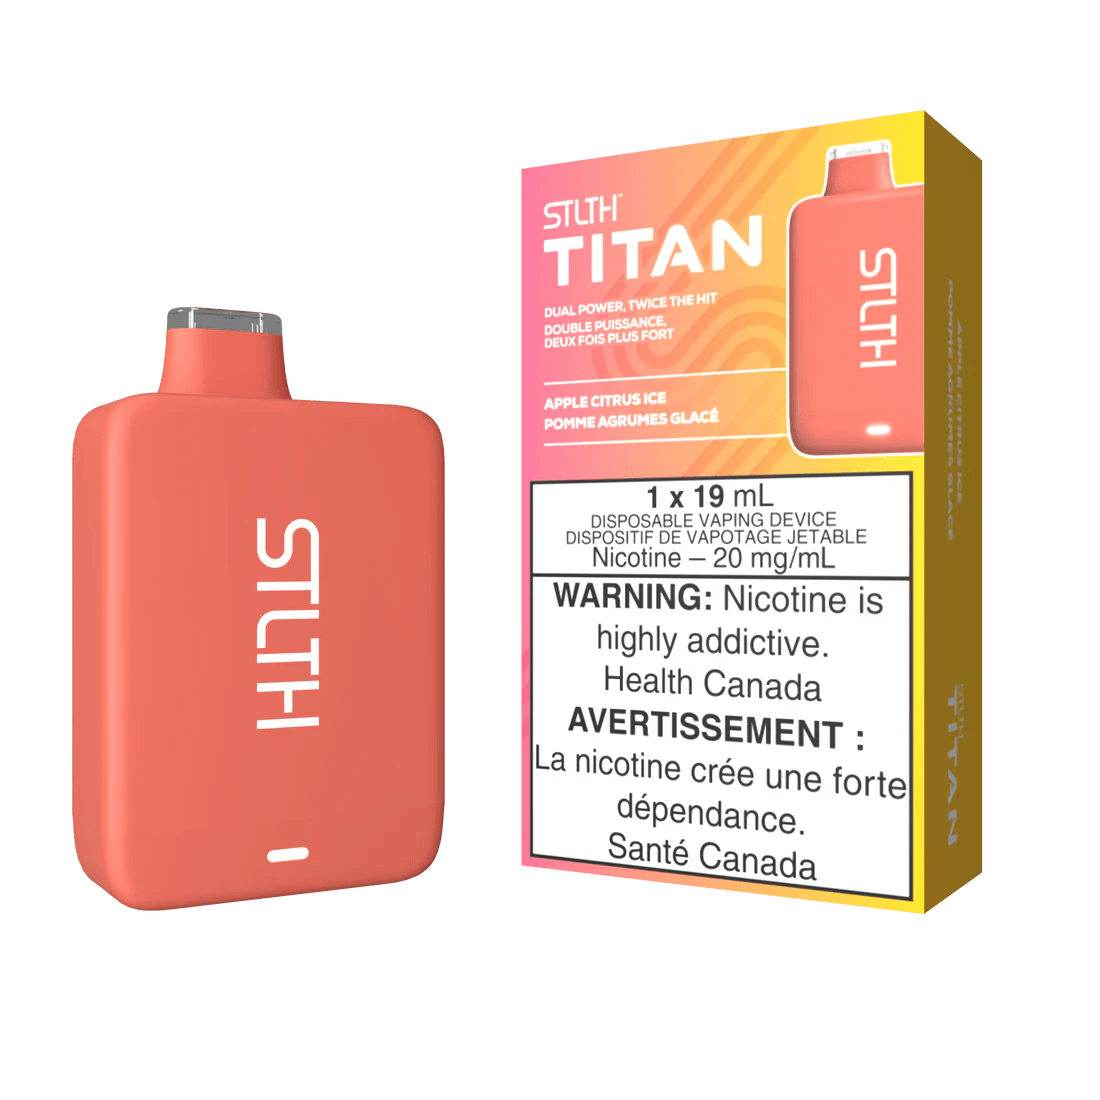 STLTH Titan - Apple Citrus Ice - Vapor Shoppe